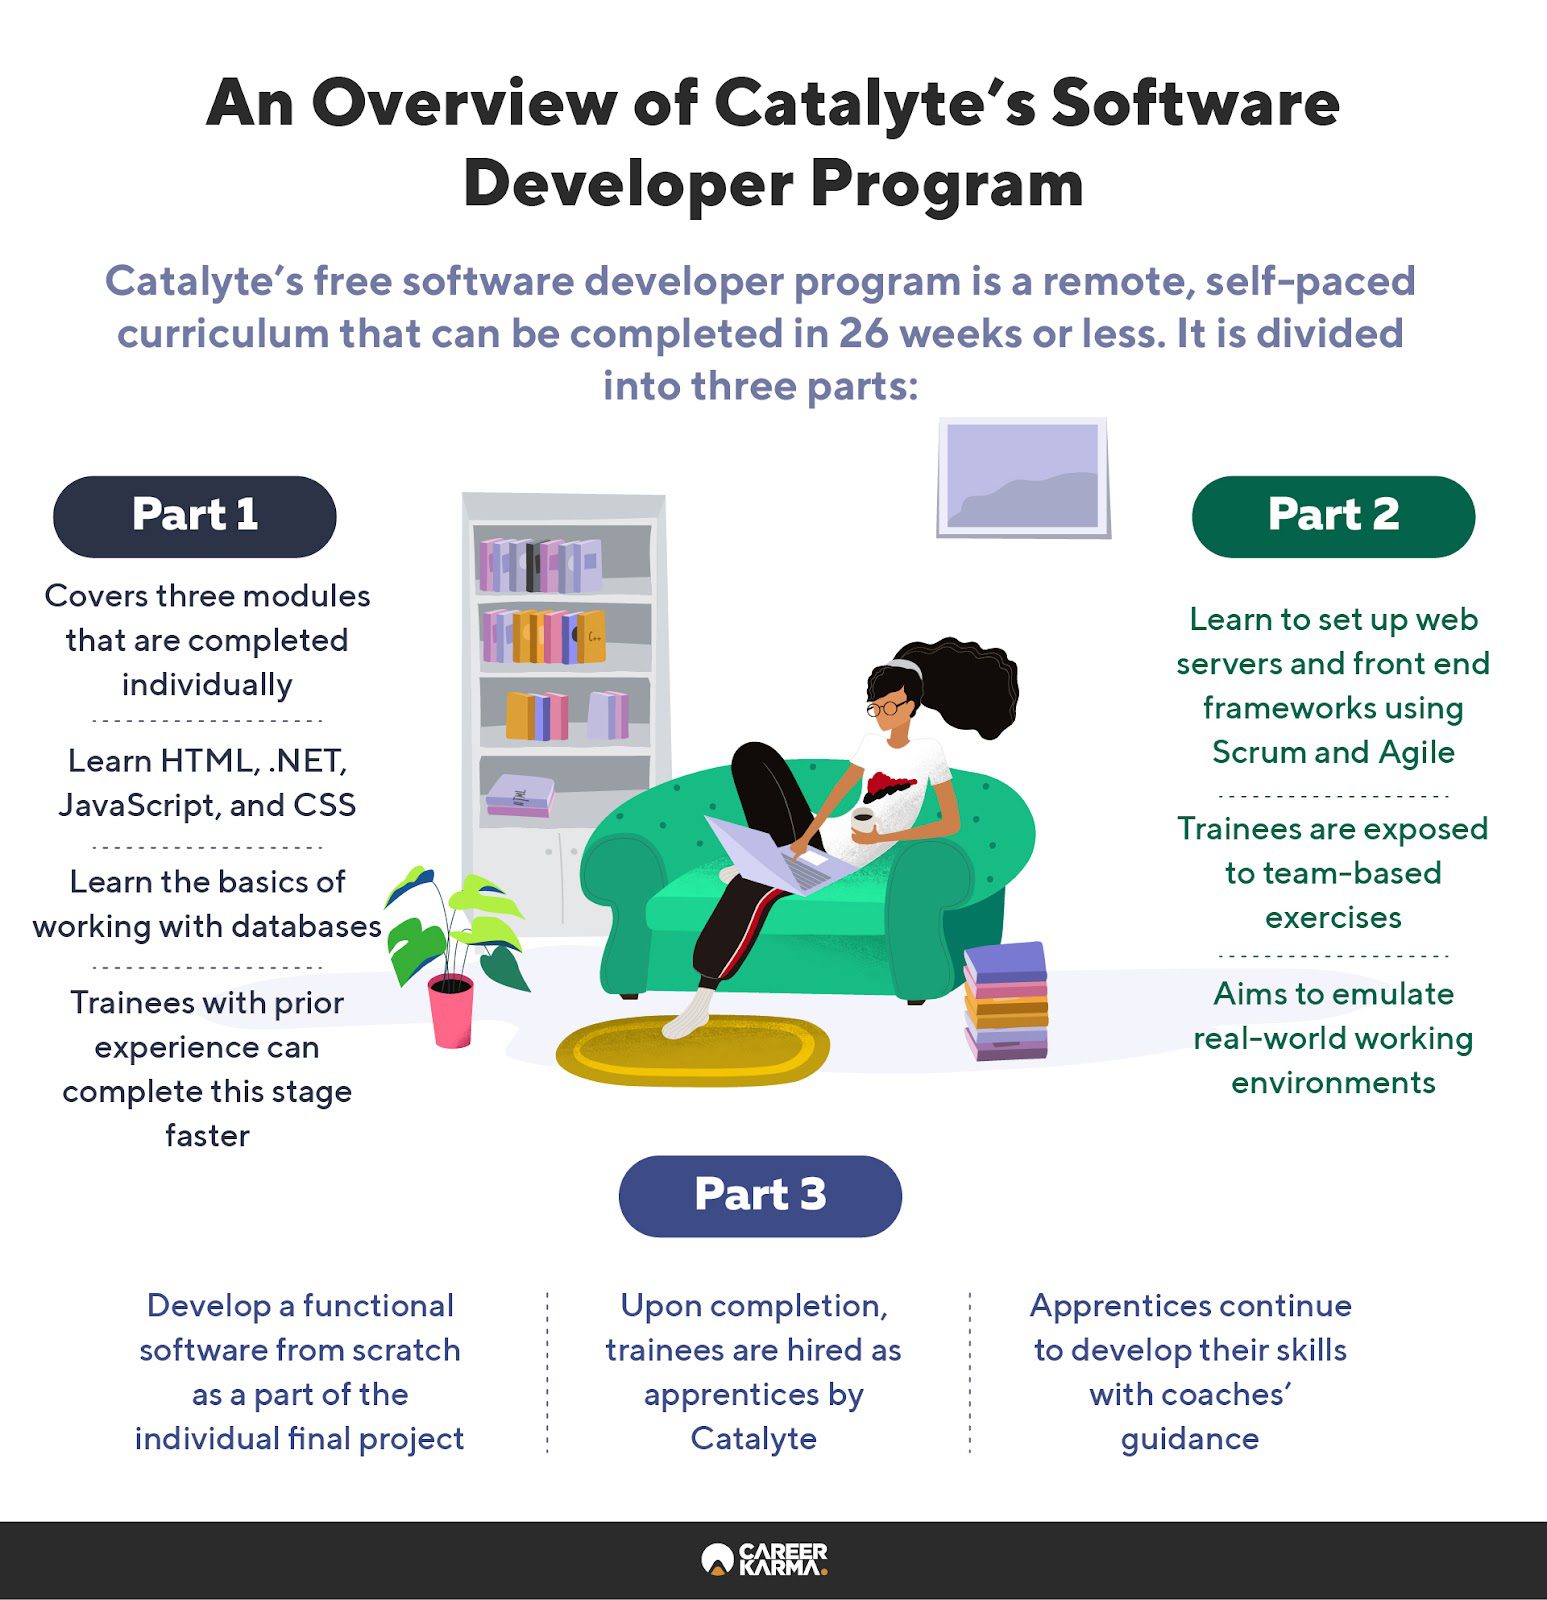 An infographic showing an overview of Catalyte’s Software Developer program curriculum 